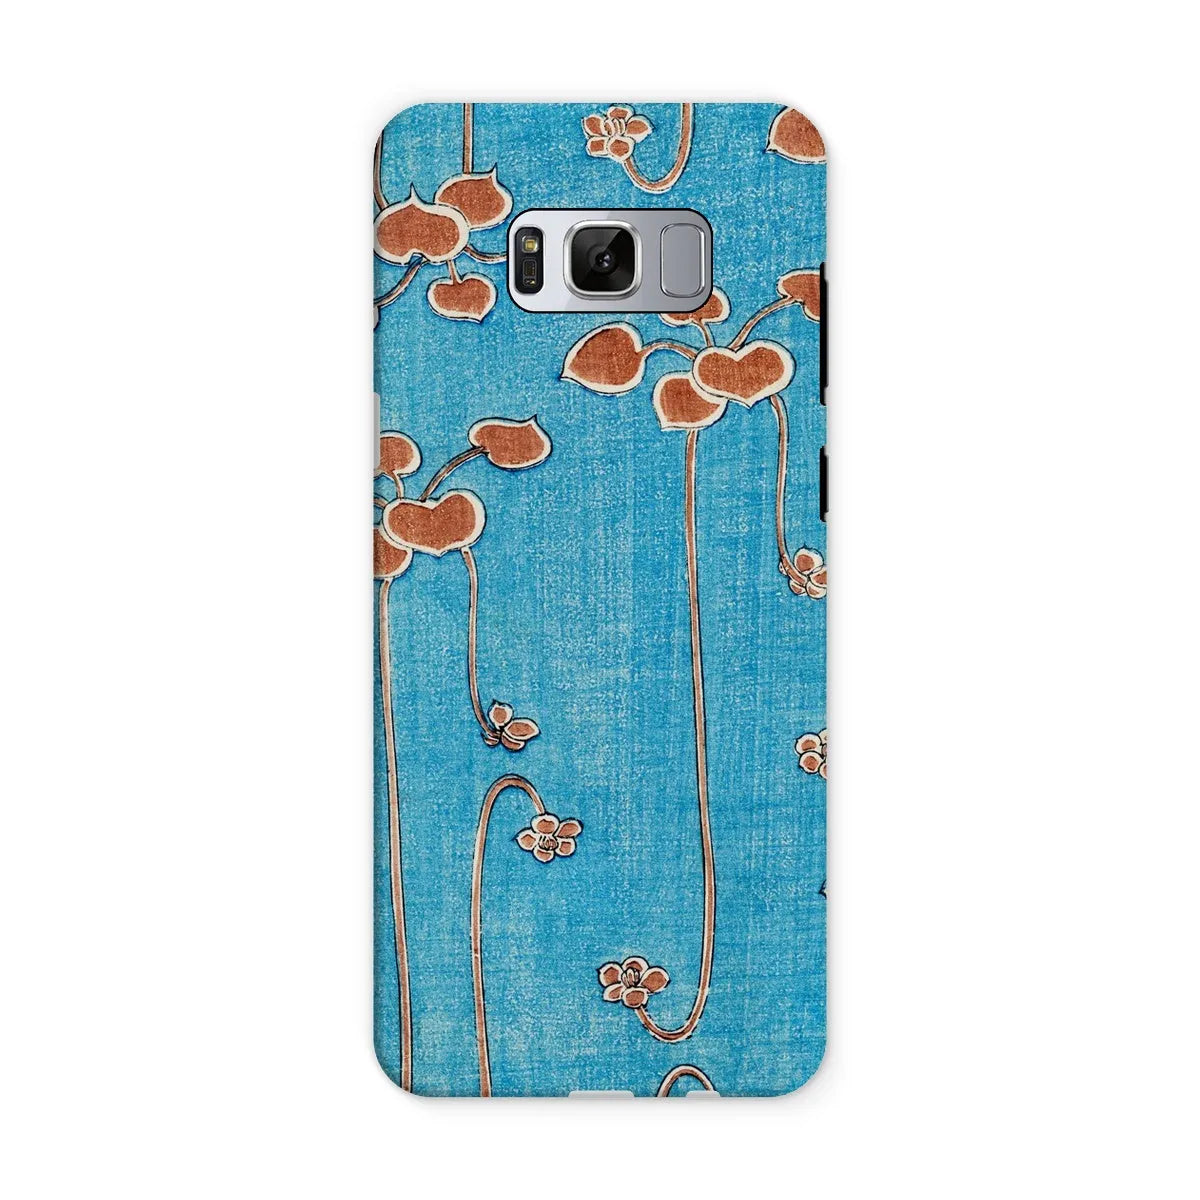 Vines - Japanese Nihonga Art Phone Case - Watanabe Shōtei - Samsung Galaxy S8 / Matte - Mobile Phone Cases - Aesthetic